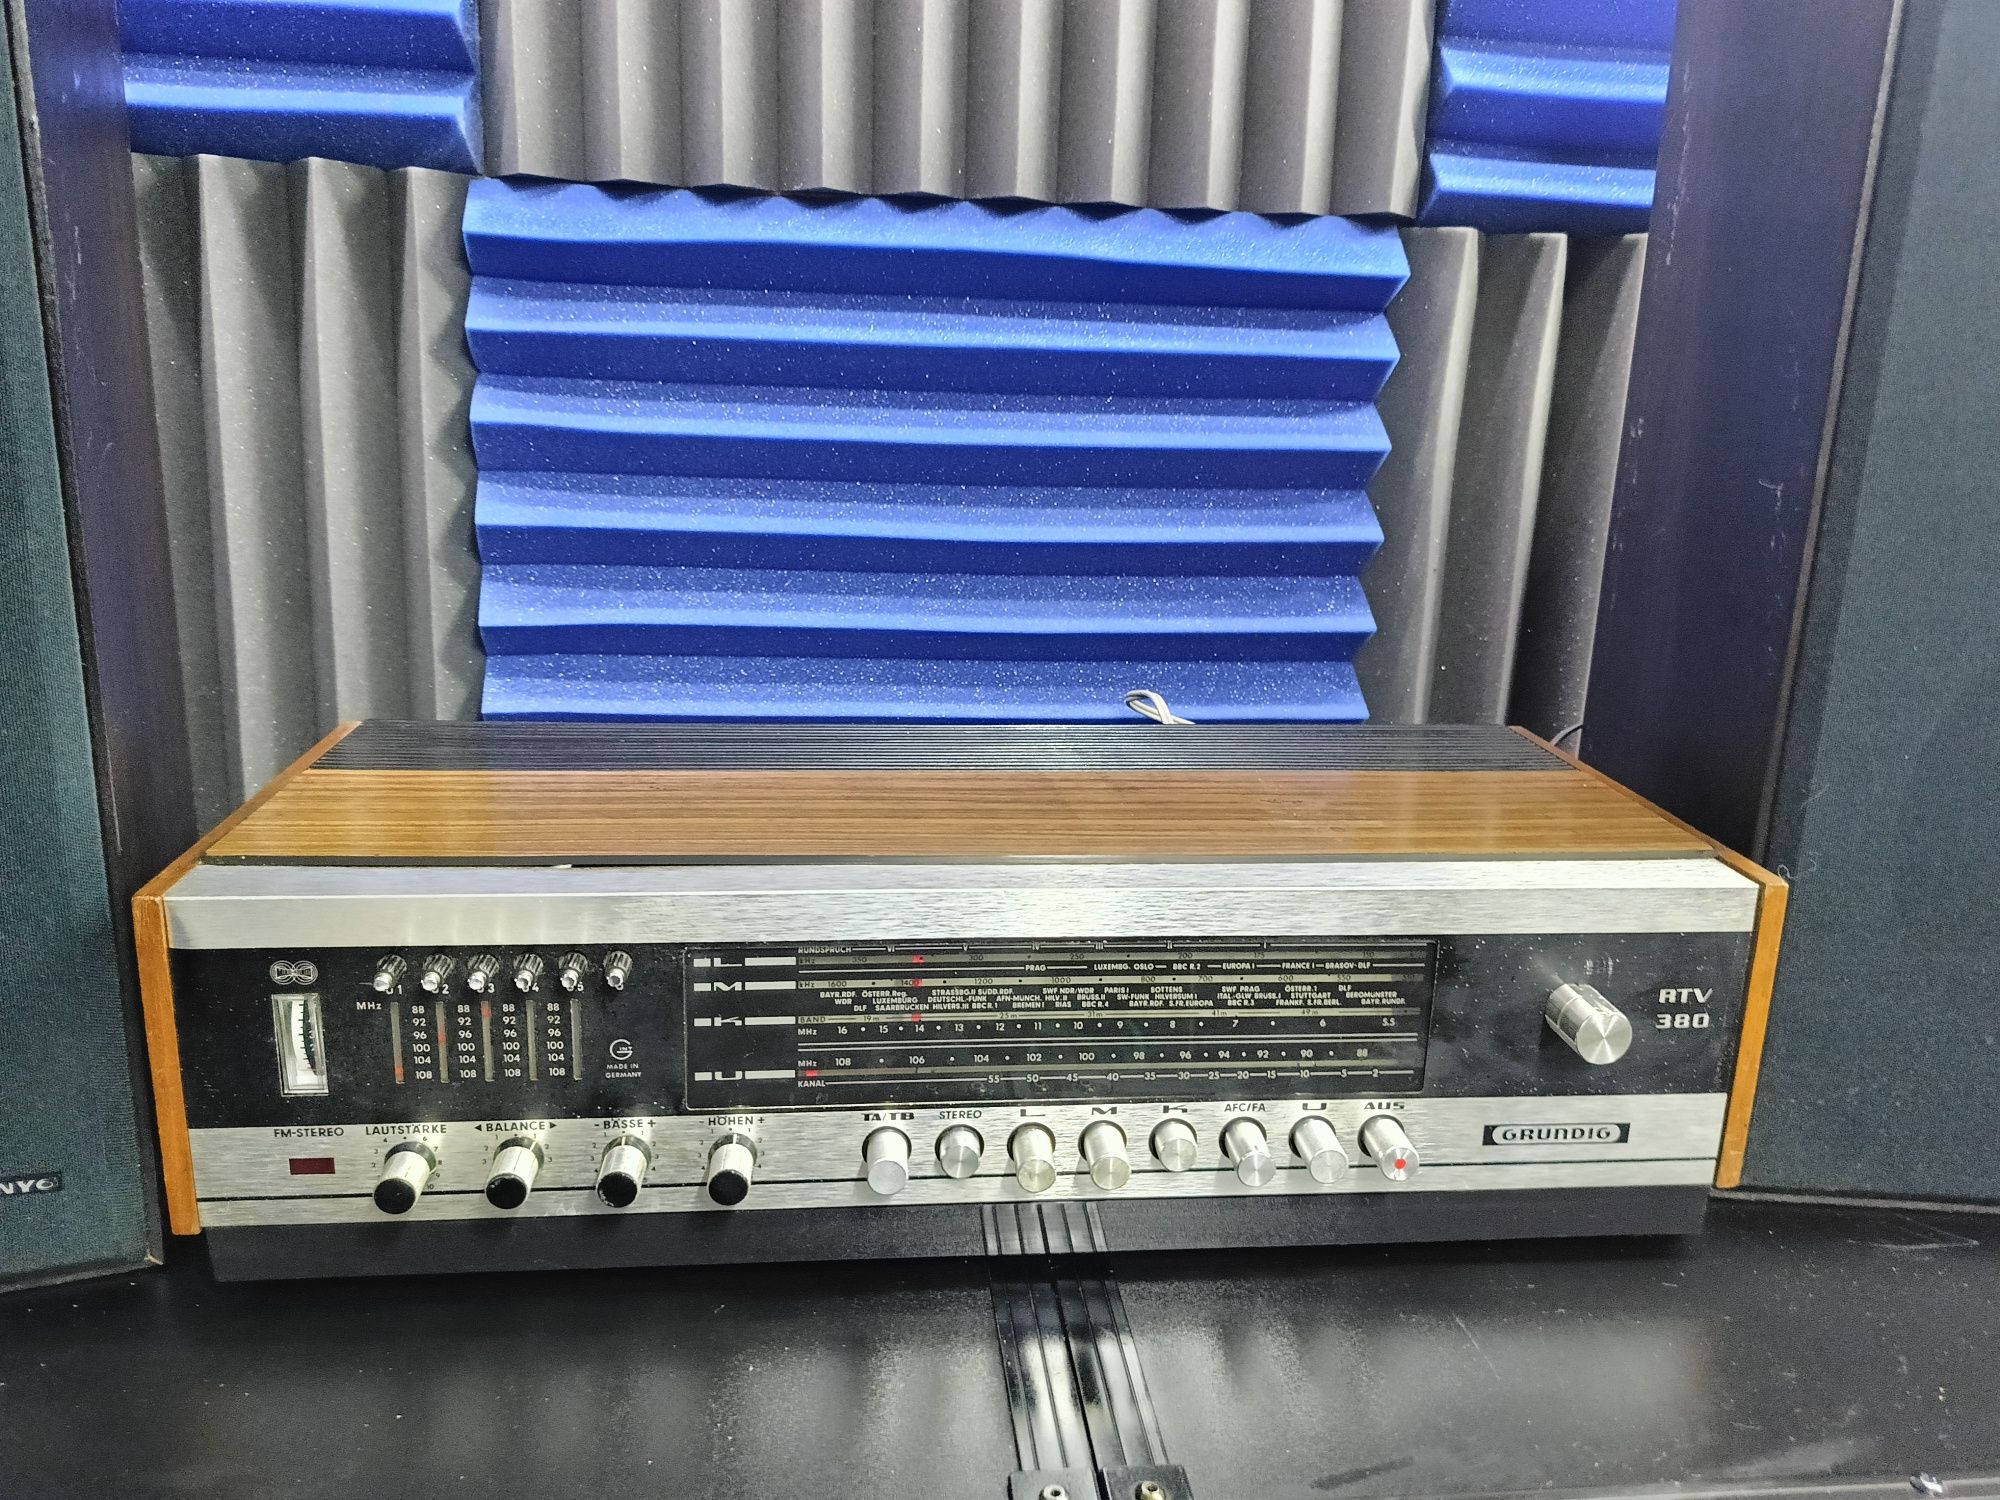 Amplituner wzmacniacz vintage Grundig RTV 380 lata 60 rzadki model